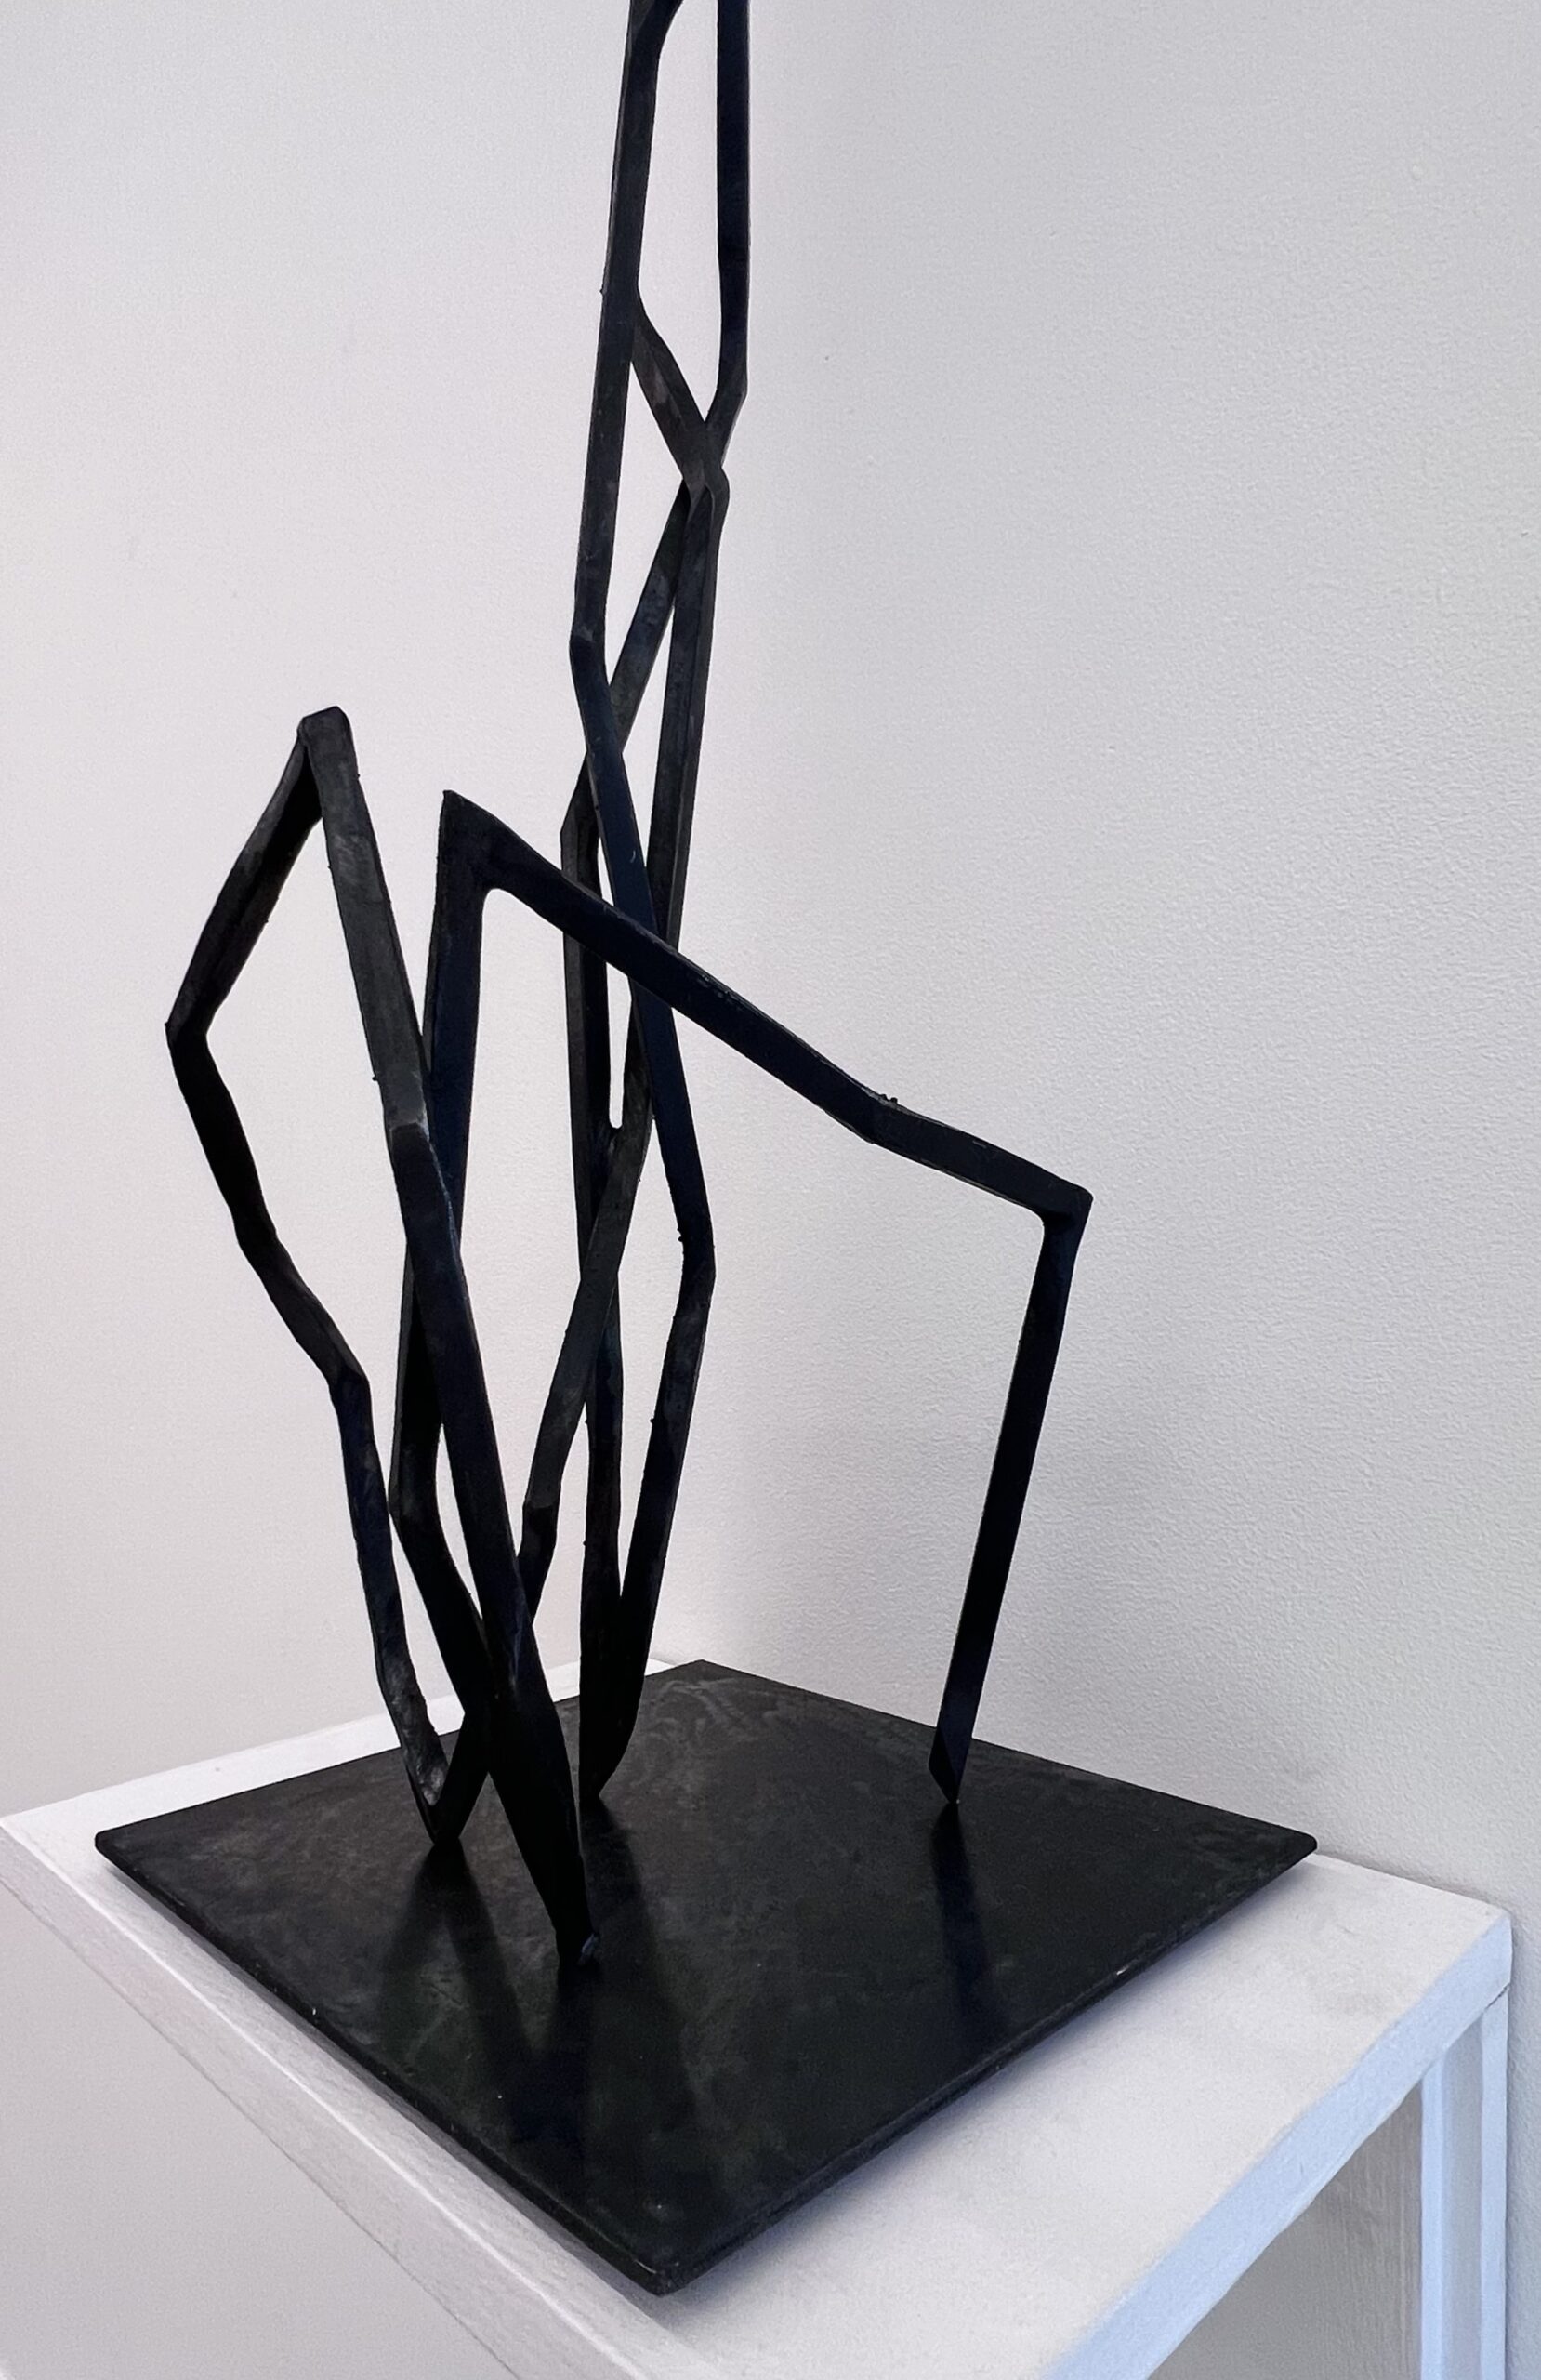 FENAT_M - Robert Schad sculpture